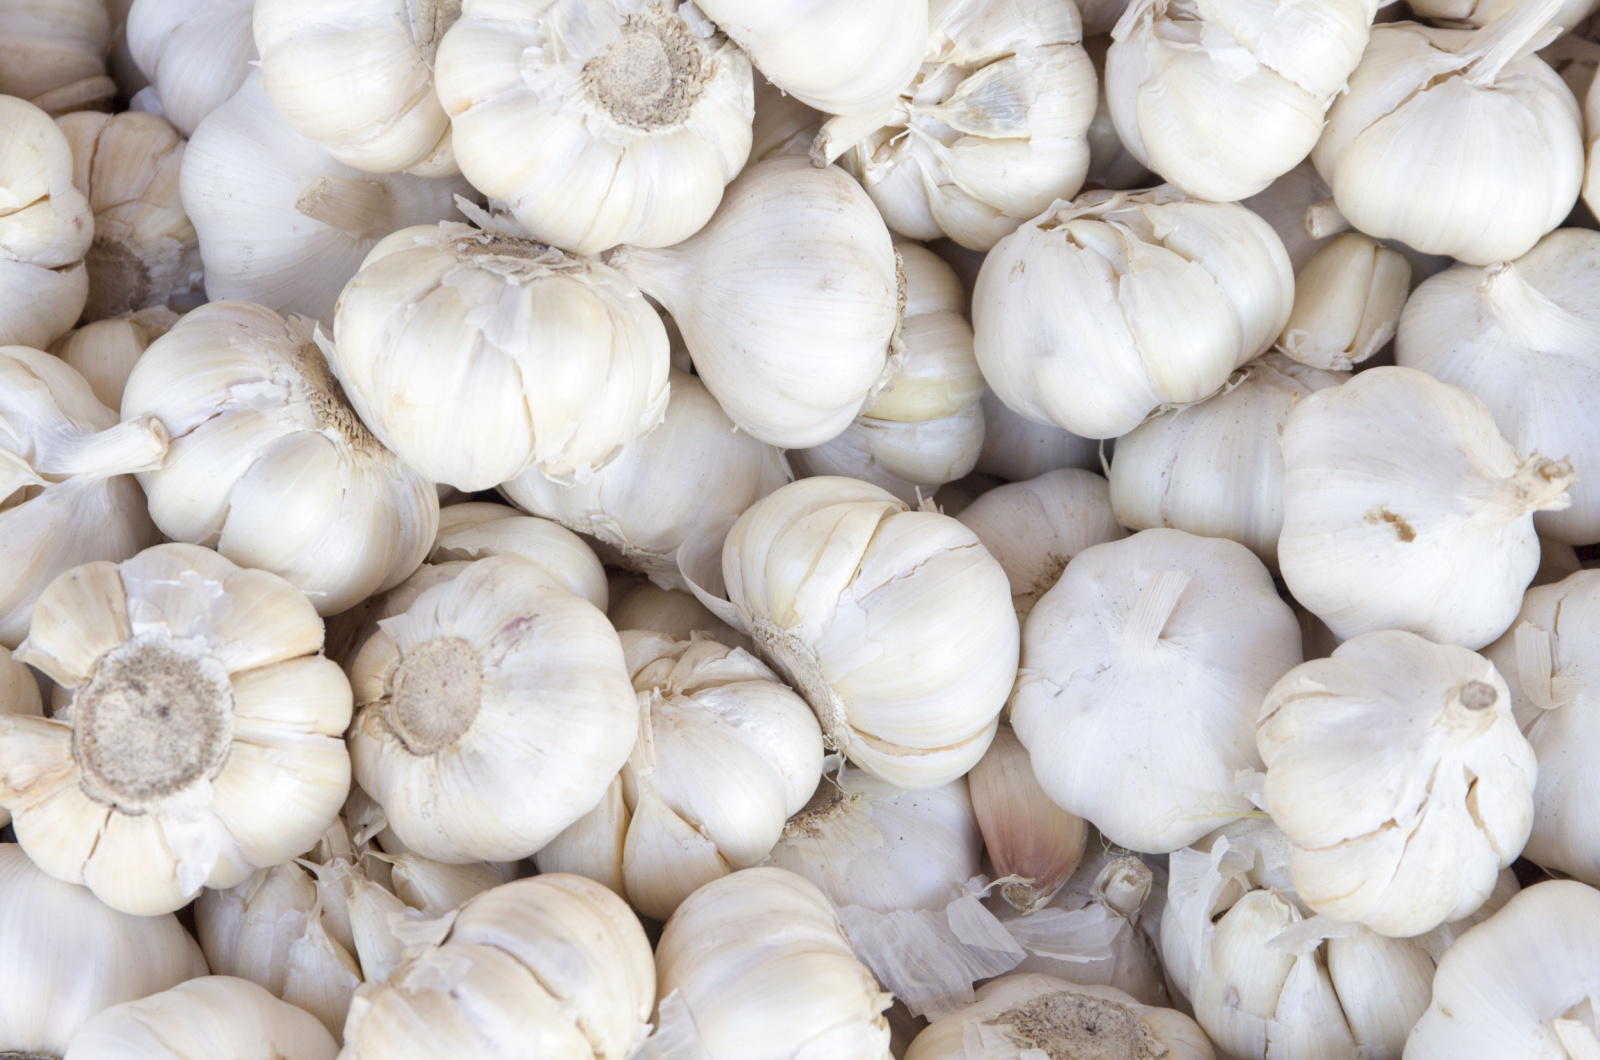 Pile of white garlic heads